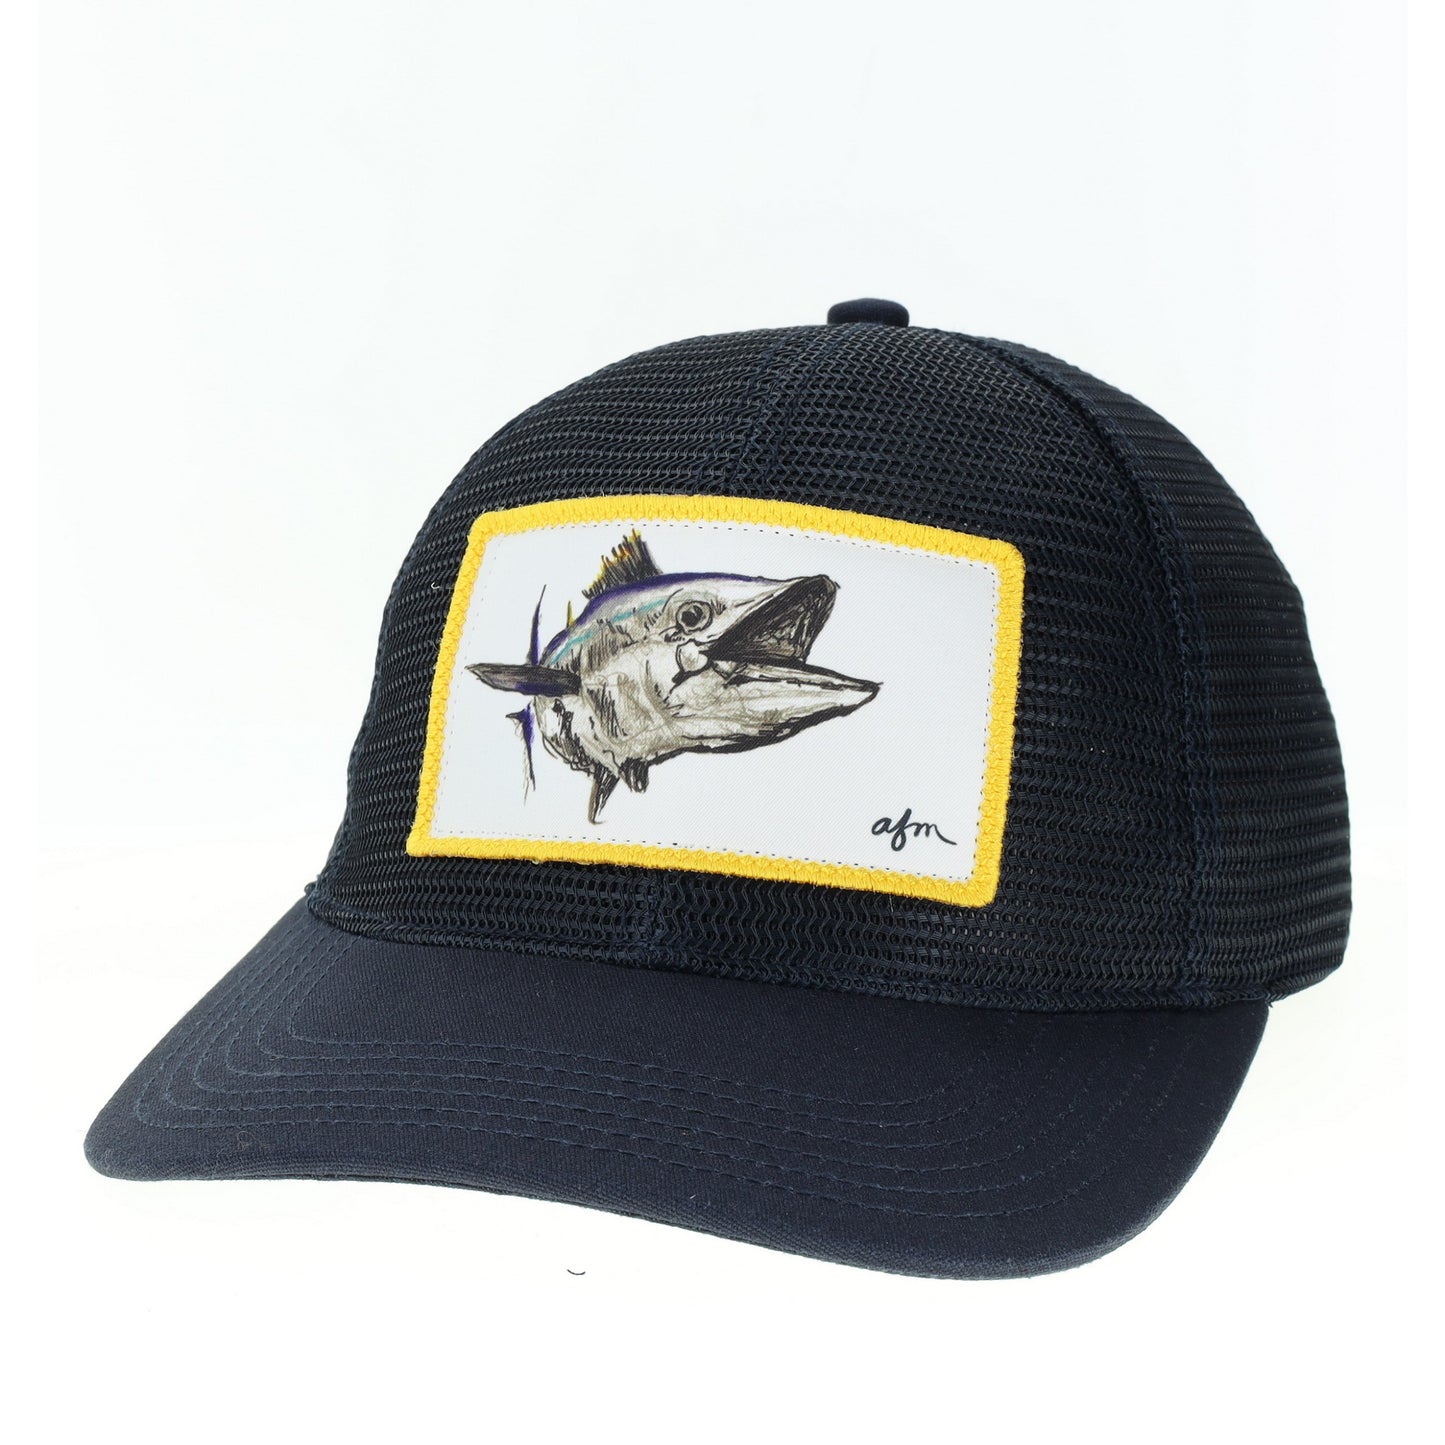 Bluefin Tuna Meshy Trucker Hat in Navy